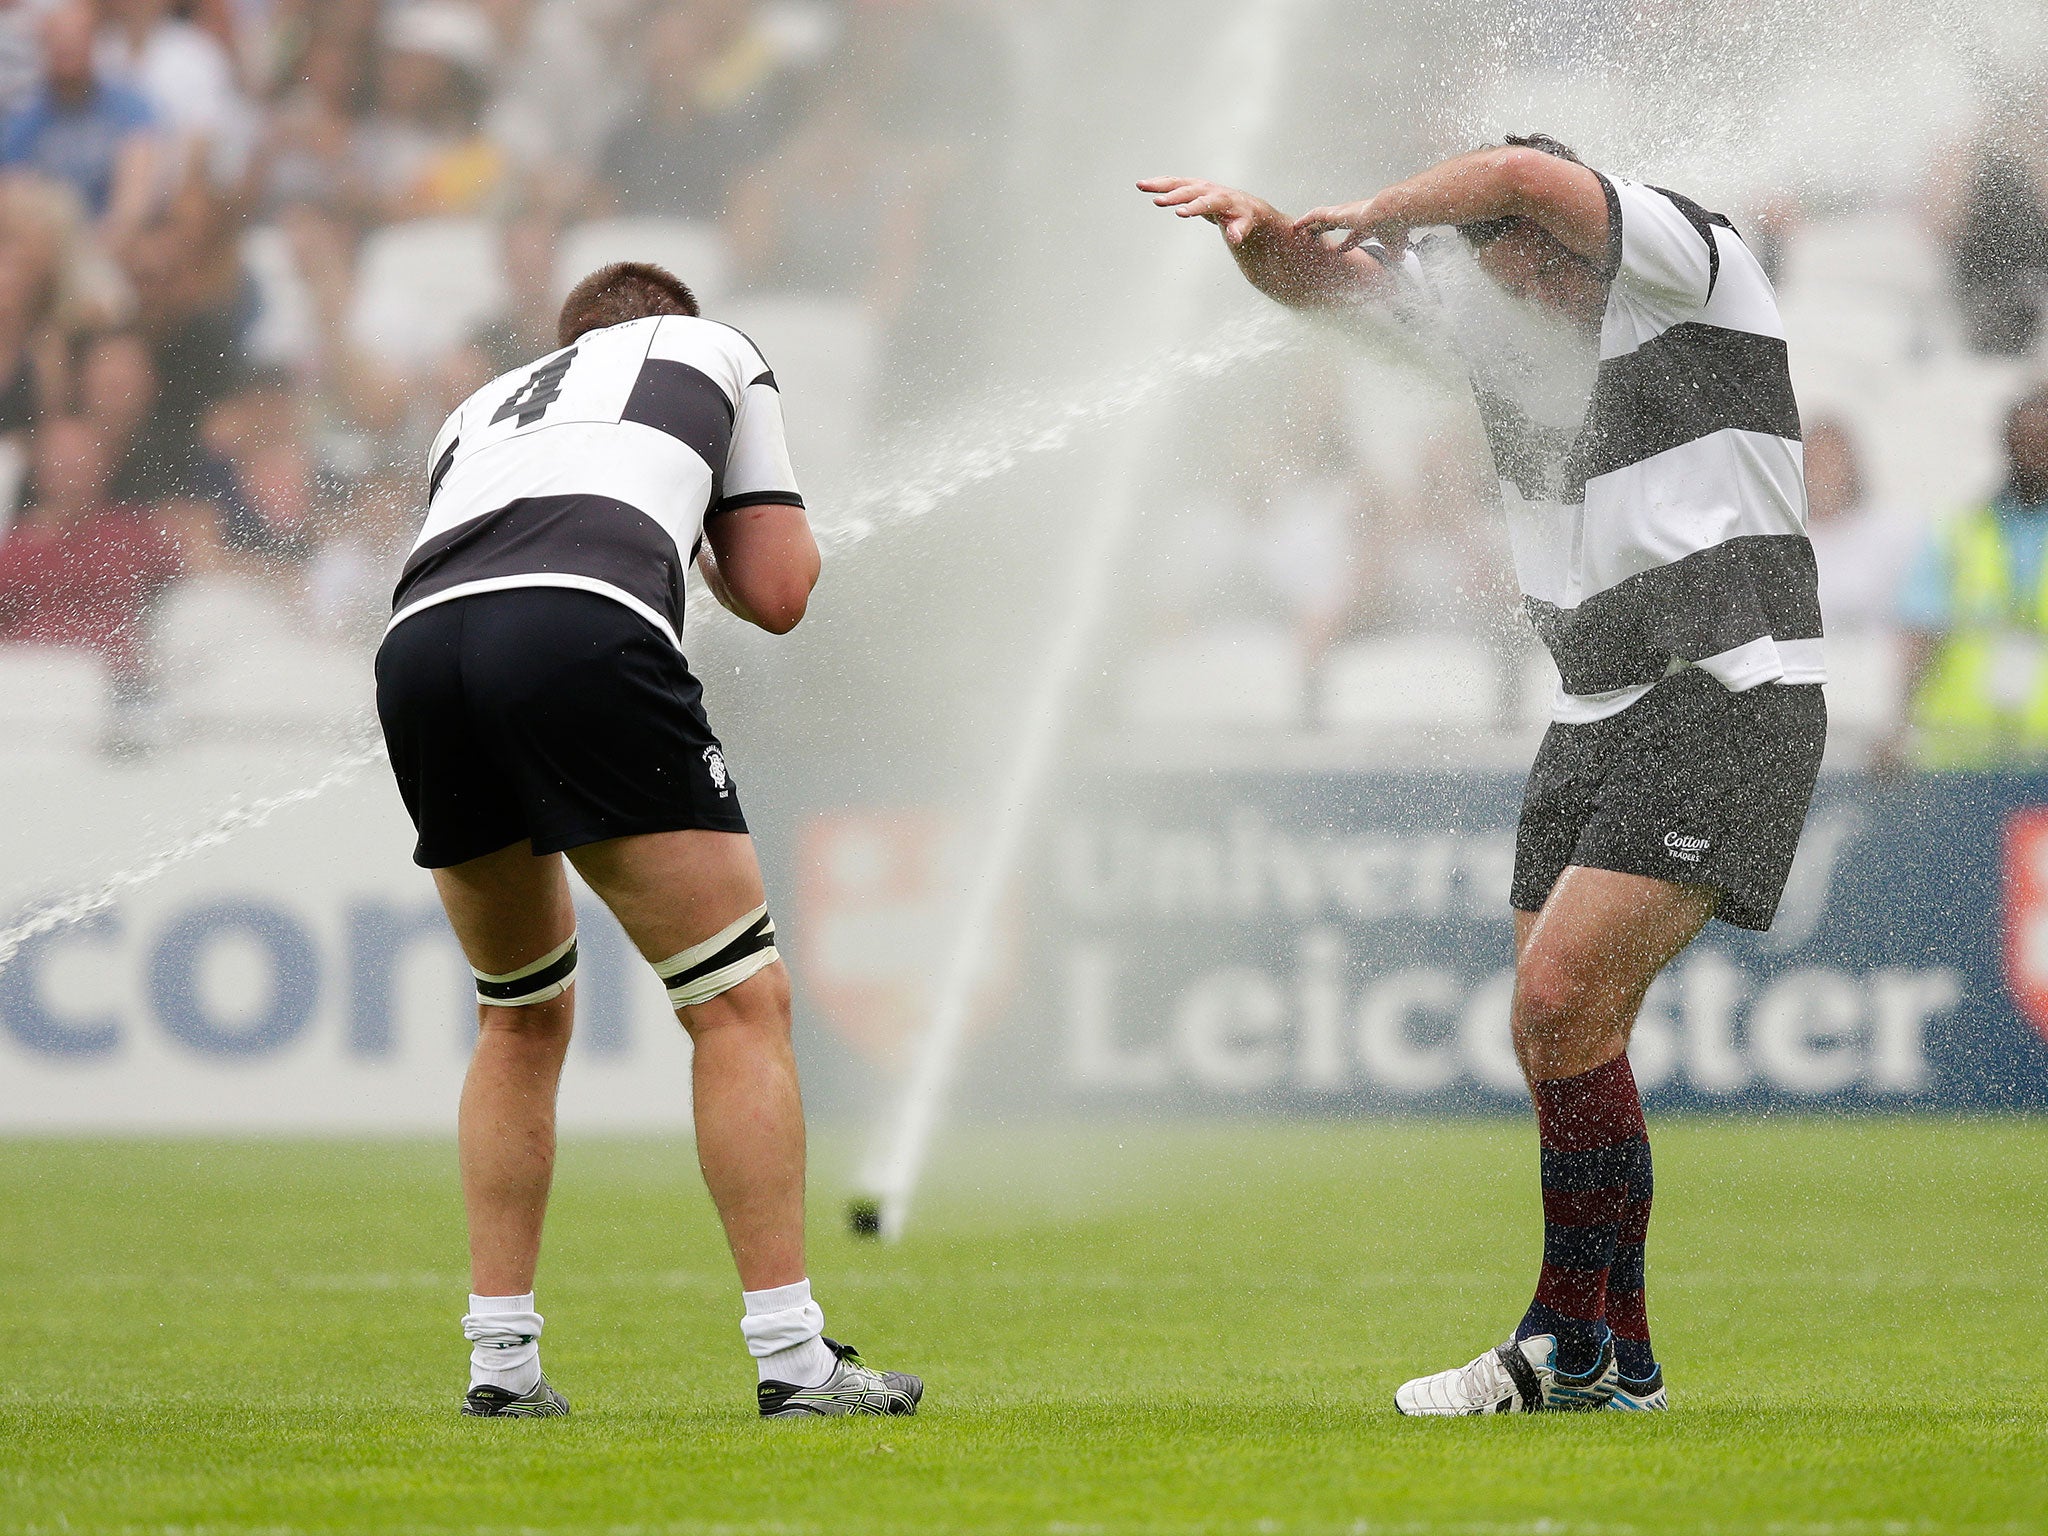 Bakkies Botha and Carl Hayman are soaked by the sprinklers